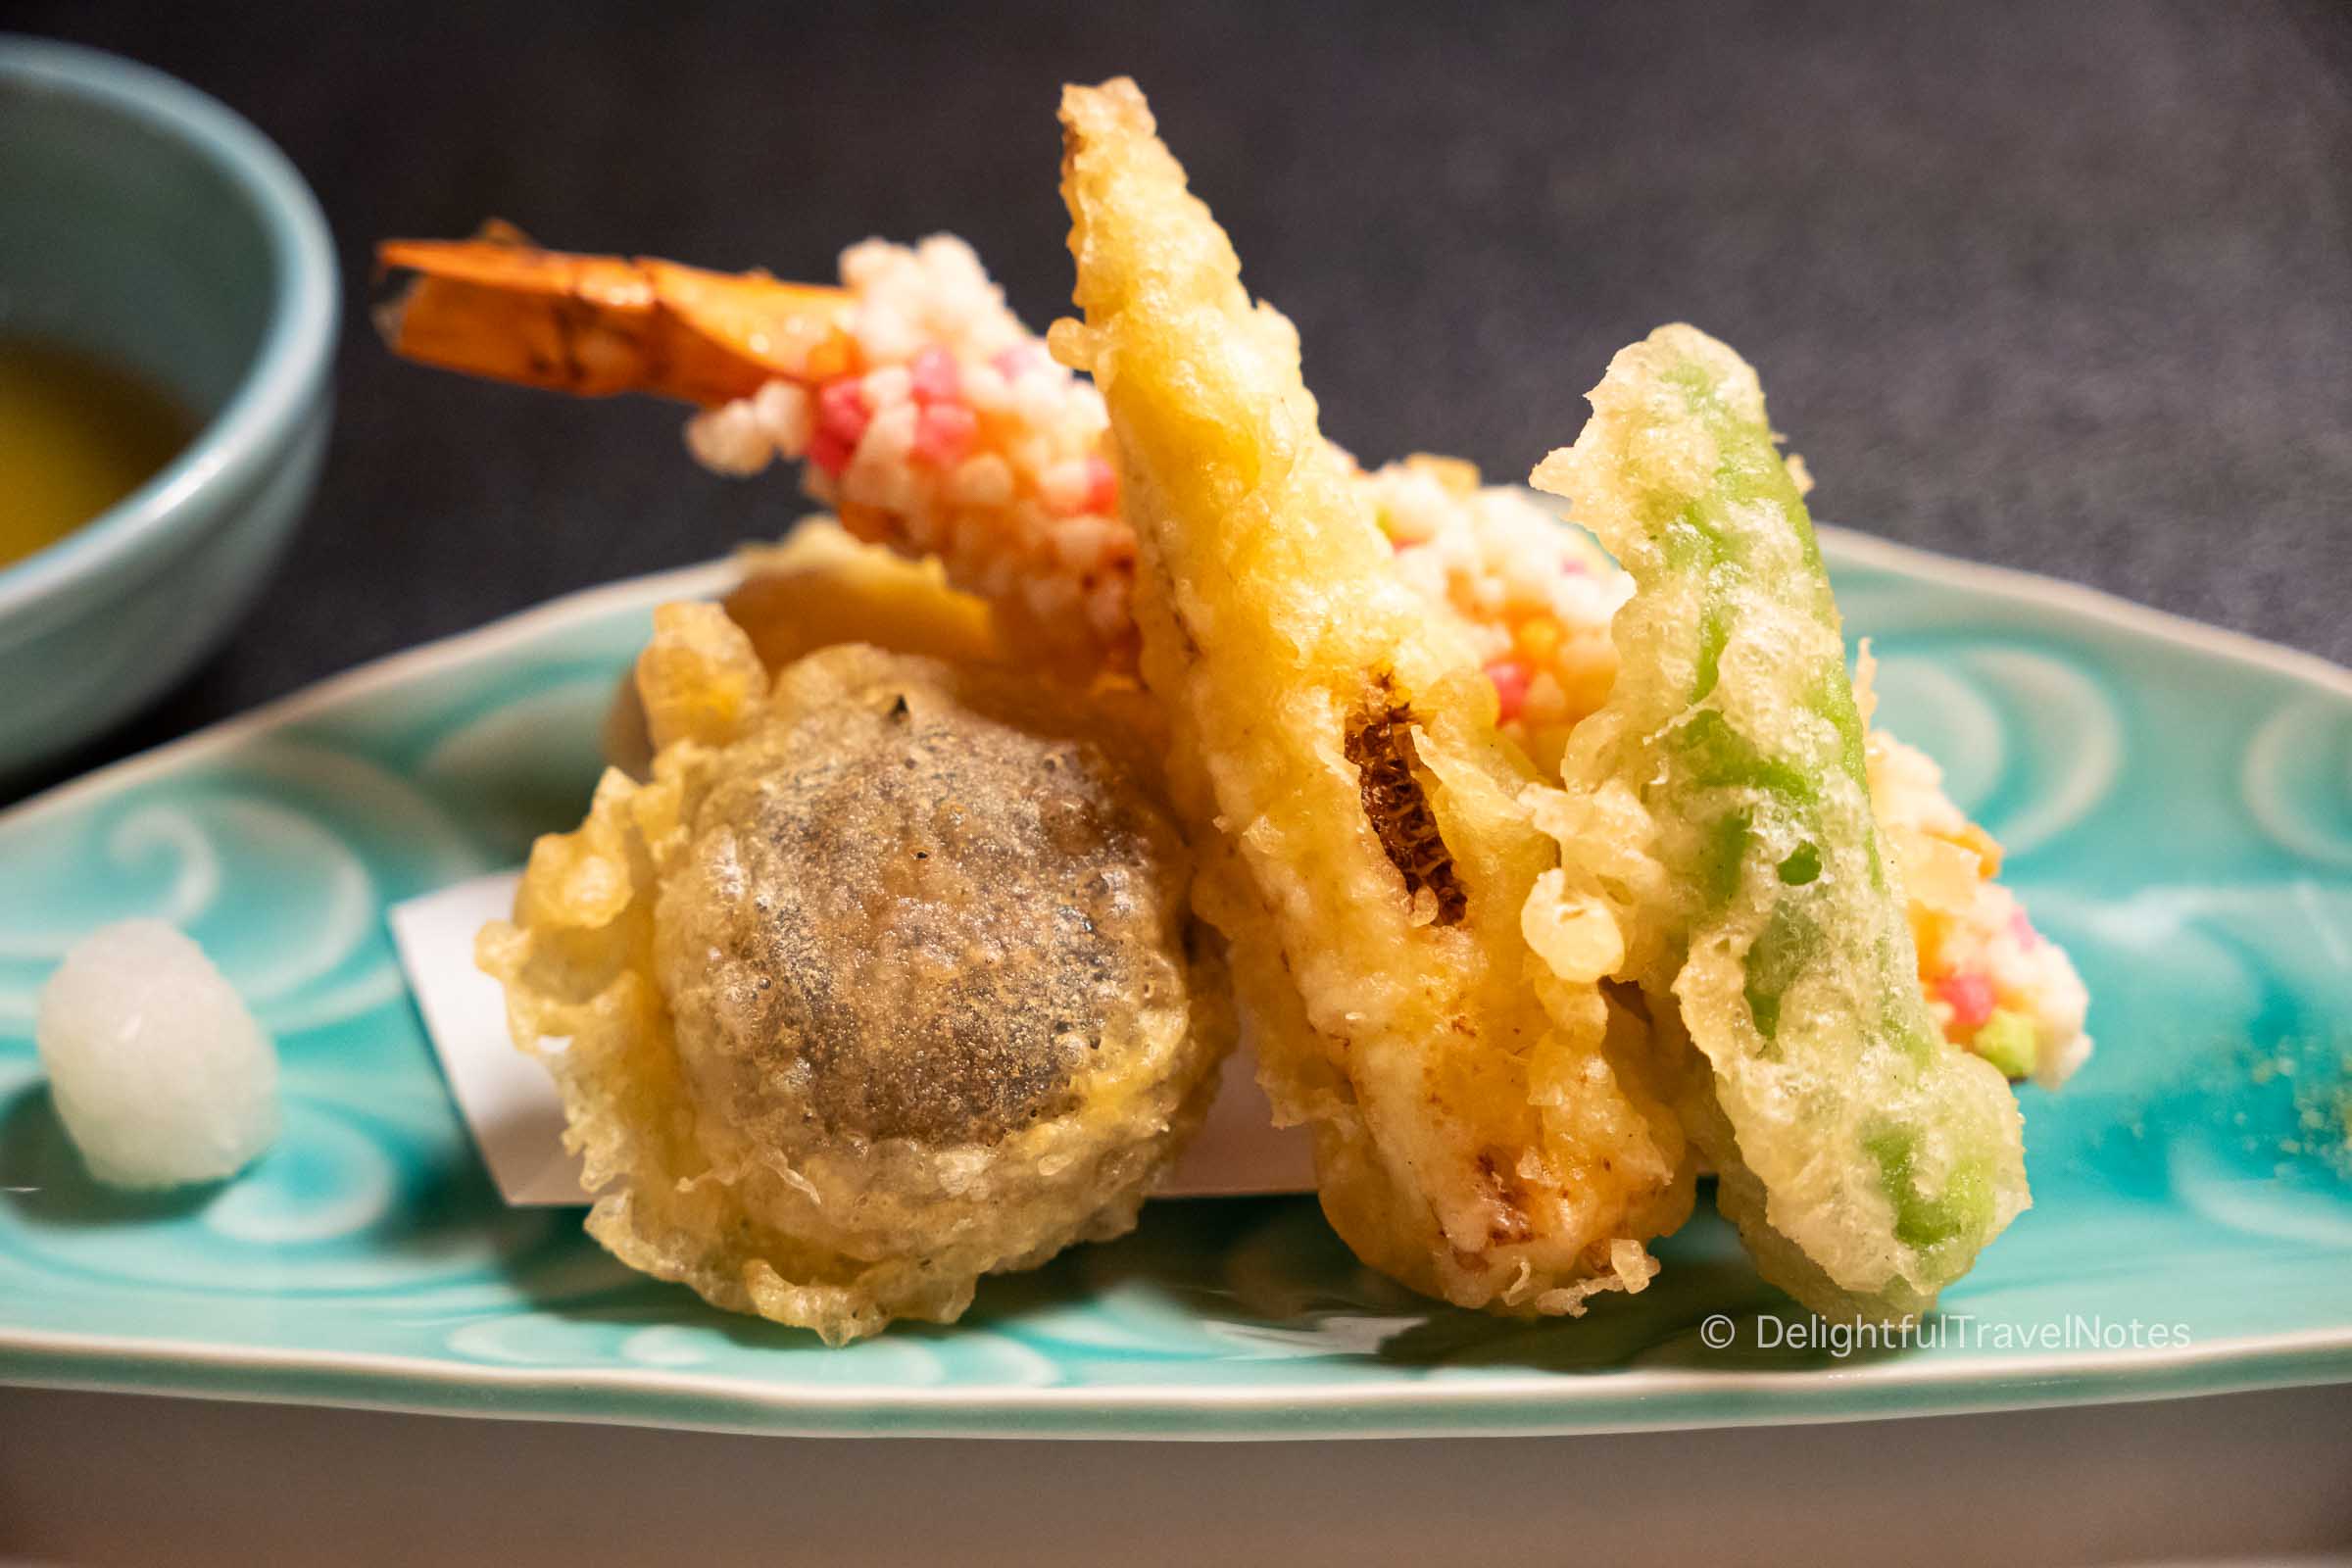 a tempura platter in the seventh course at Hanasaki Manjiro restaurant in Kyoto